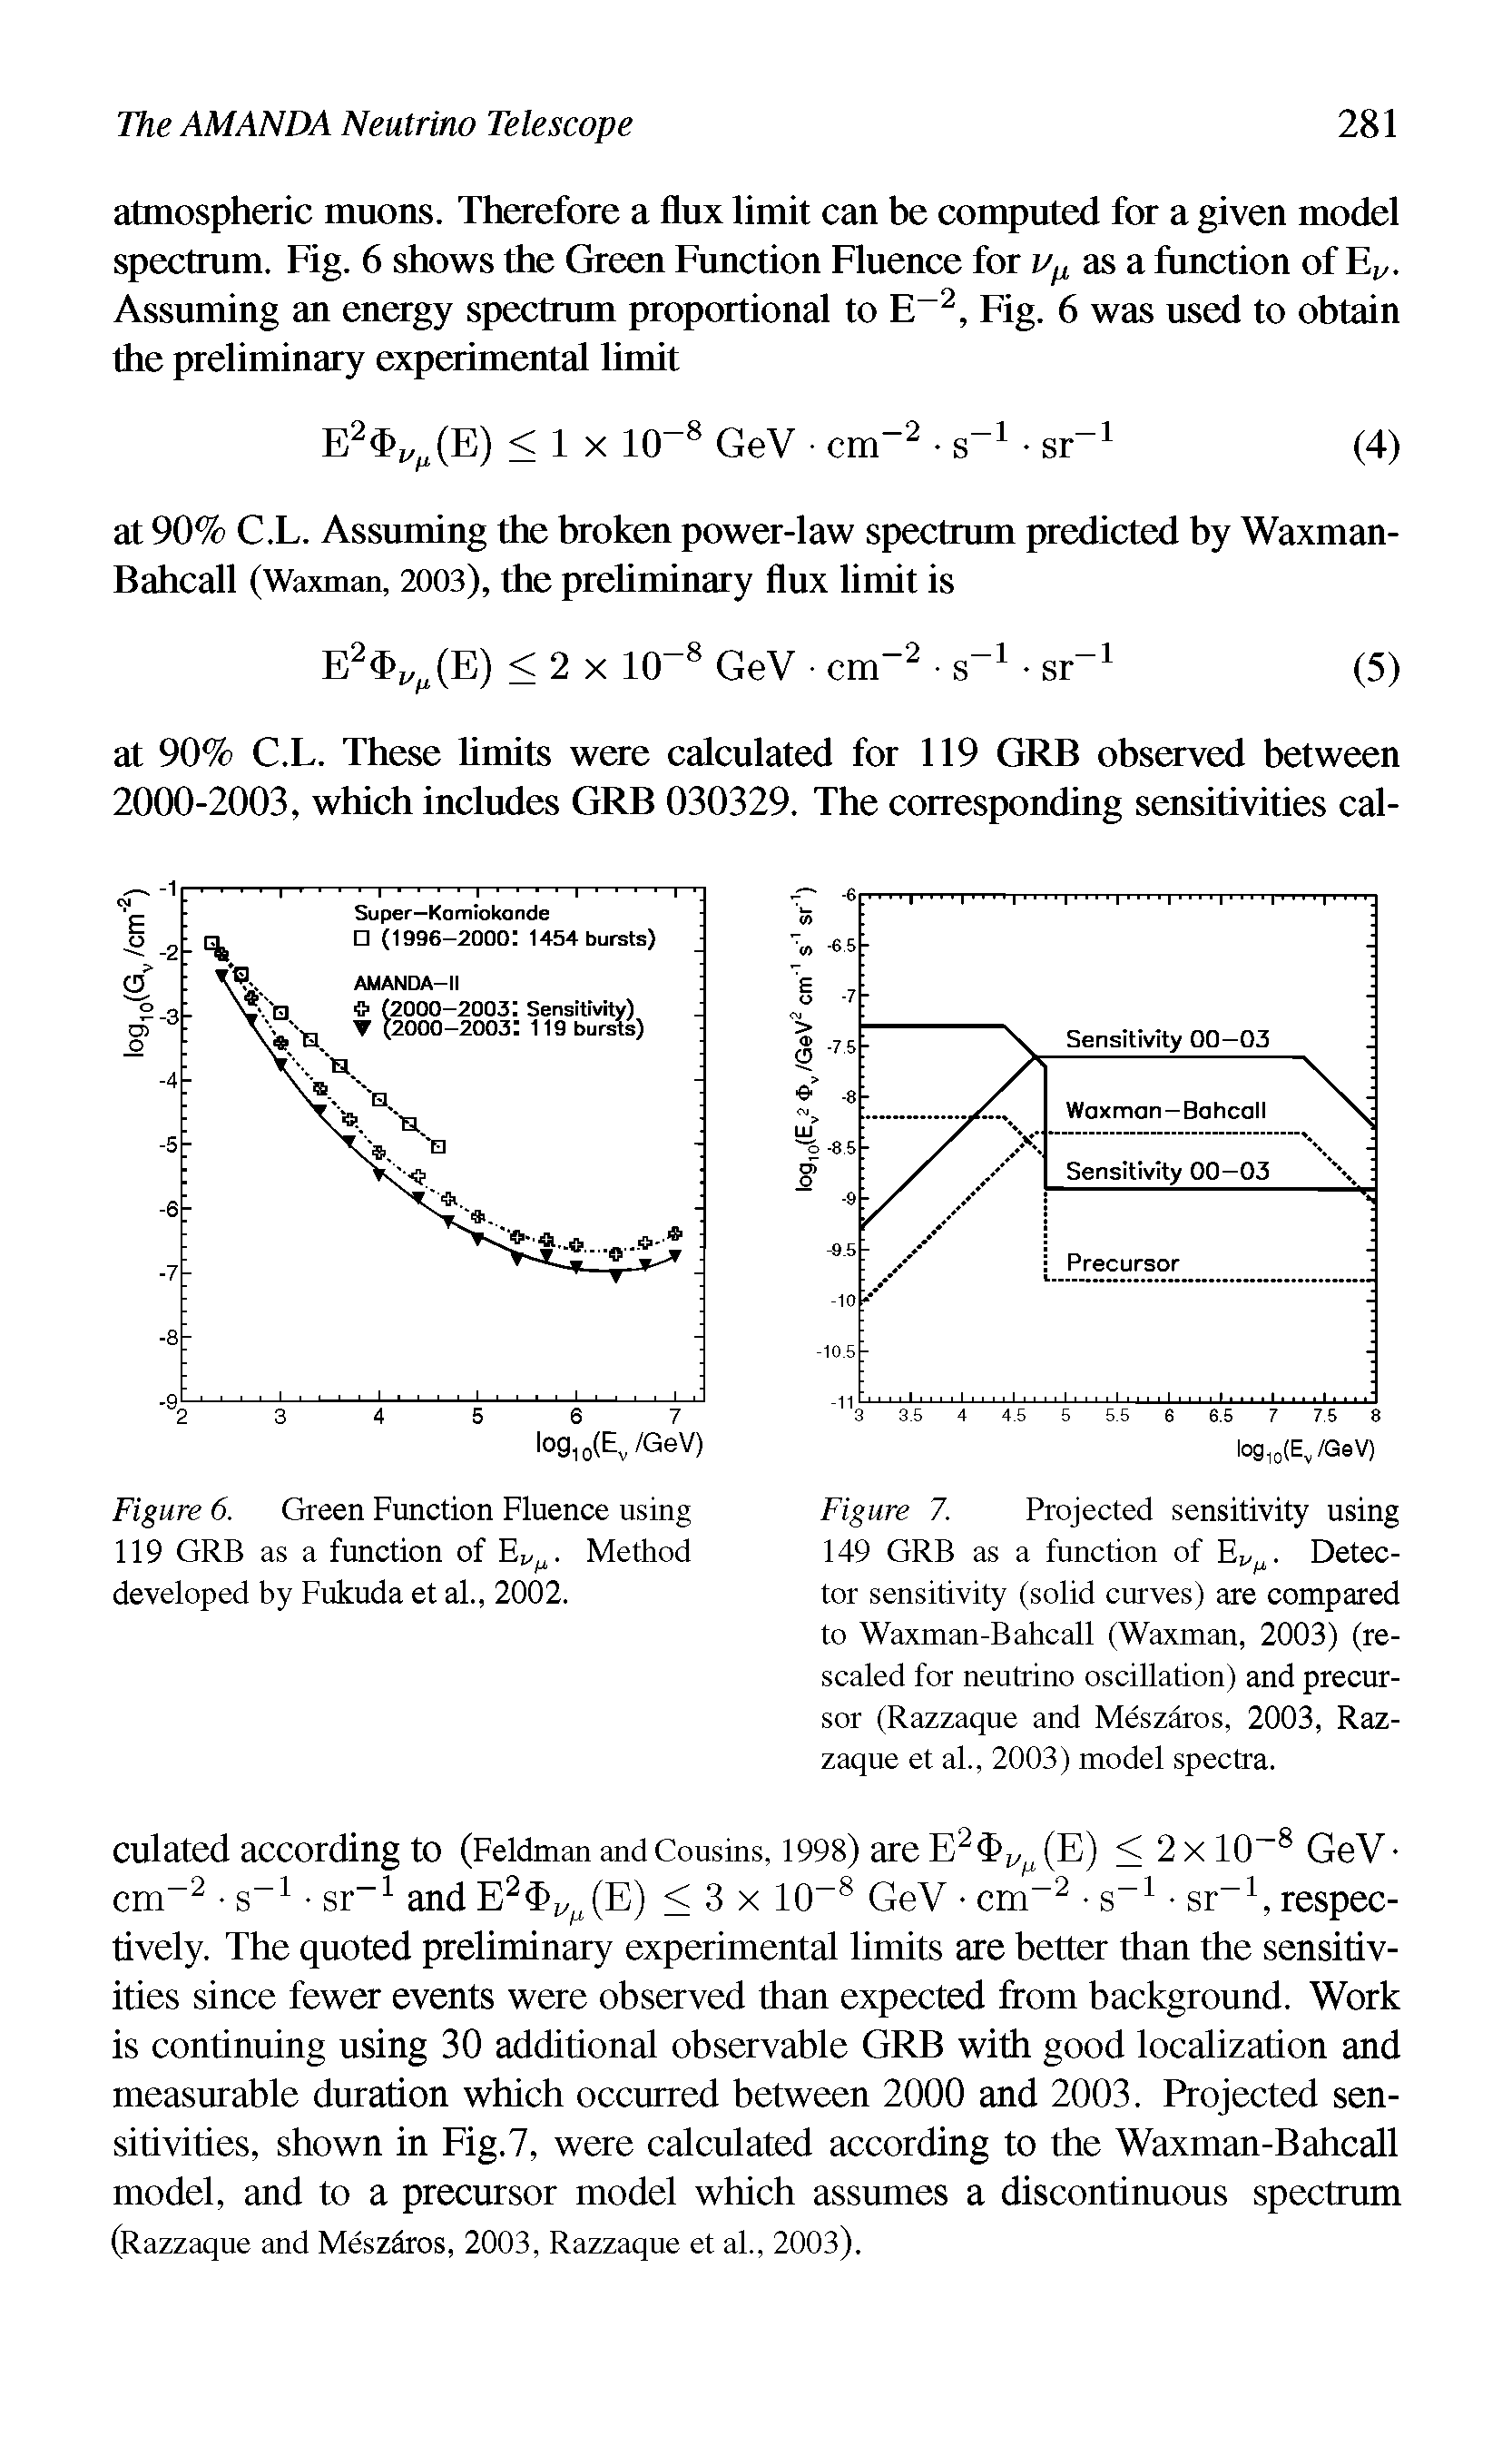 Figure 7. Projected sensitivity using 149 GRB as a function of E M. Detector sensitivity (solid curves) are compared to Waxman-Bahcall (Waxman, 2003) (rescaled for neutrino oscillation) and precursor (Razzaque and Meszaros, 2003, Raz-zaque et al., 2003) model spectra.